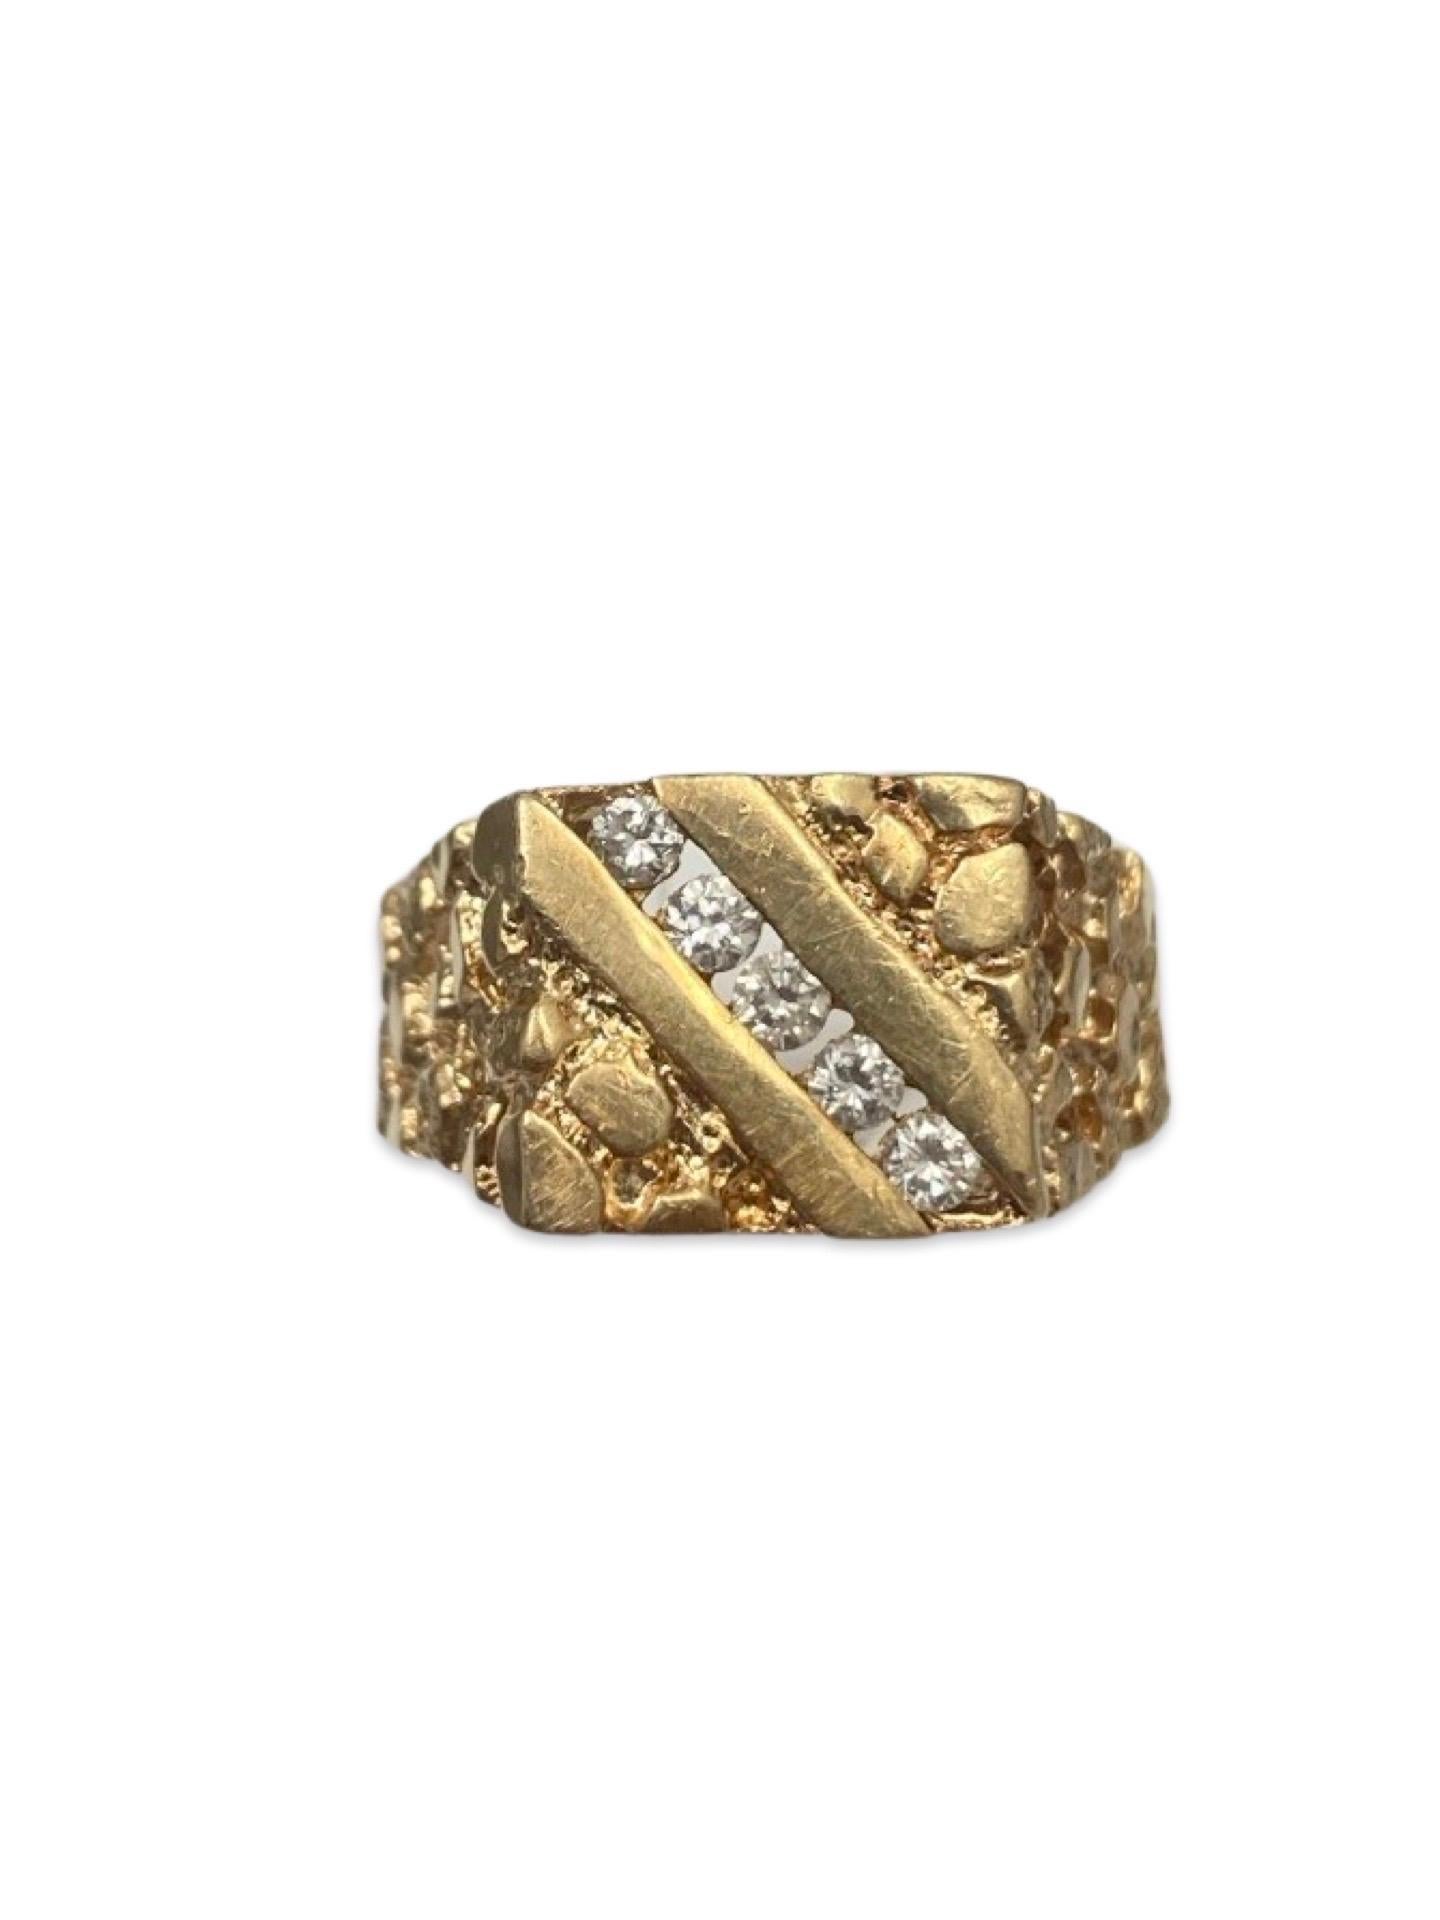 Vintage 0.40 Carat Diamonds Nugget Design Ring 14k Gold In Good Condition For Sale In Miami, FL